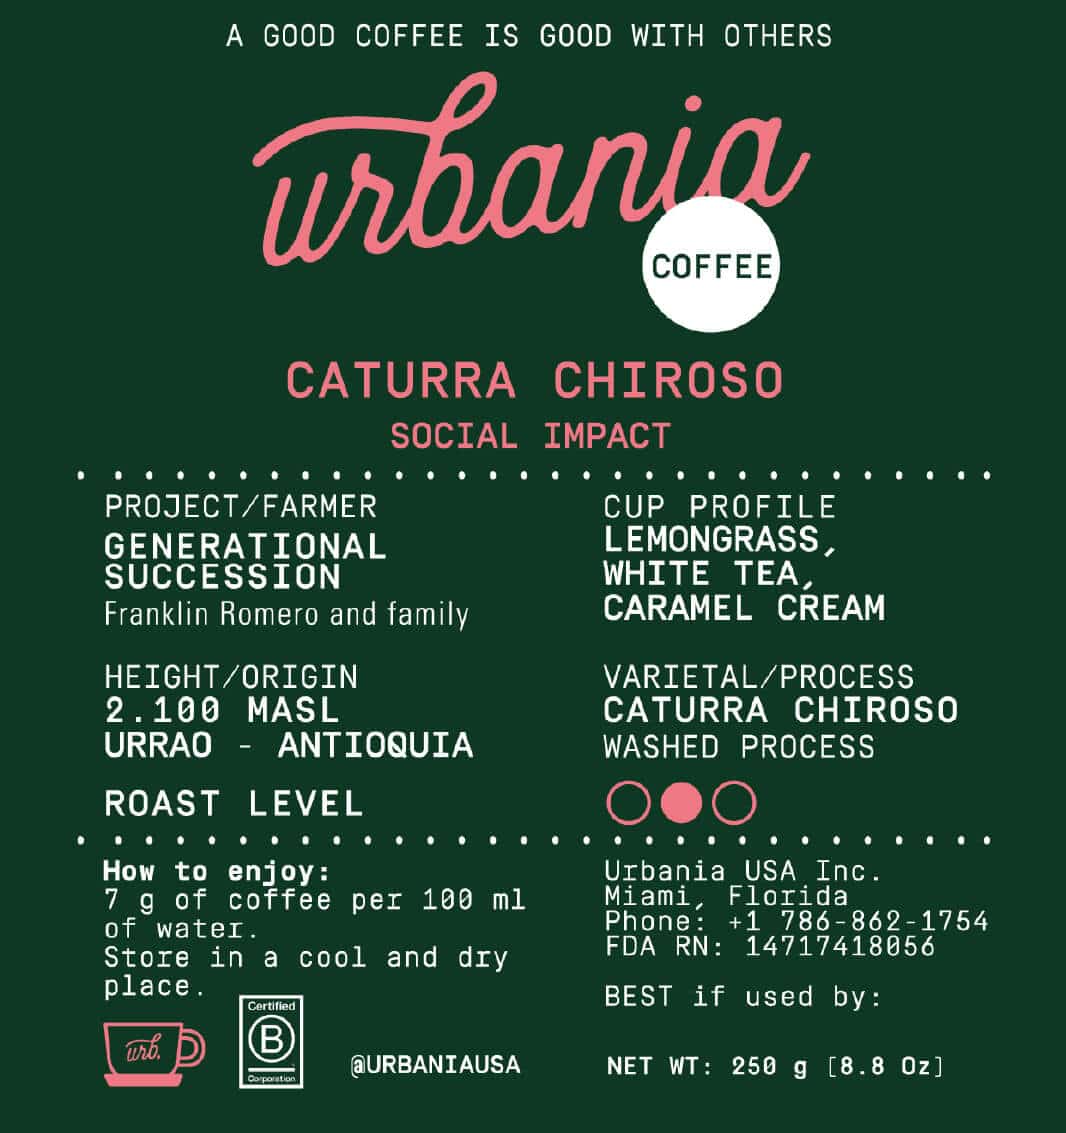 caturra-chiroso-impact-coffee-urbania-usa-colombia